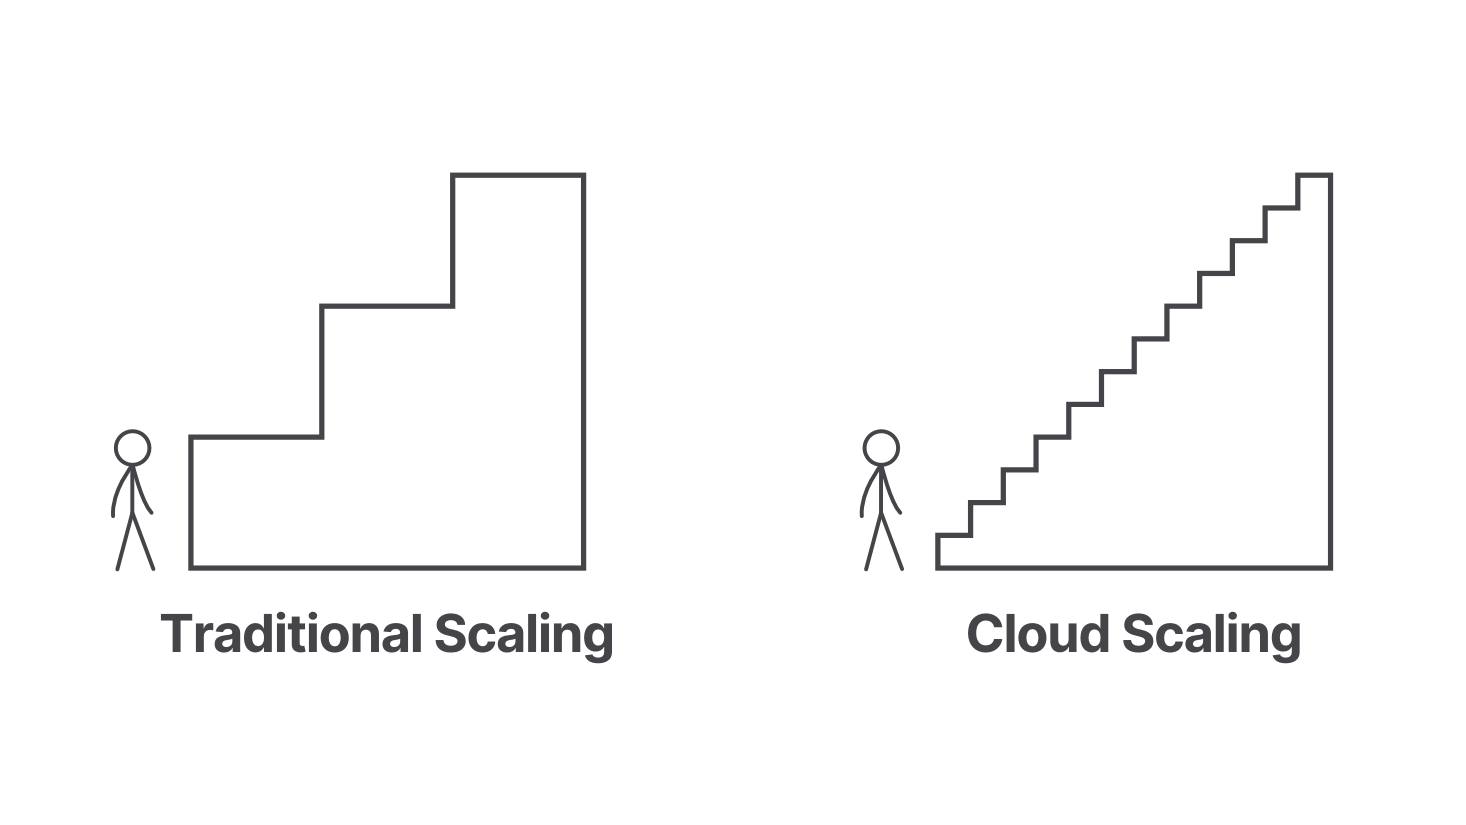 Illustration of cloud computing